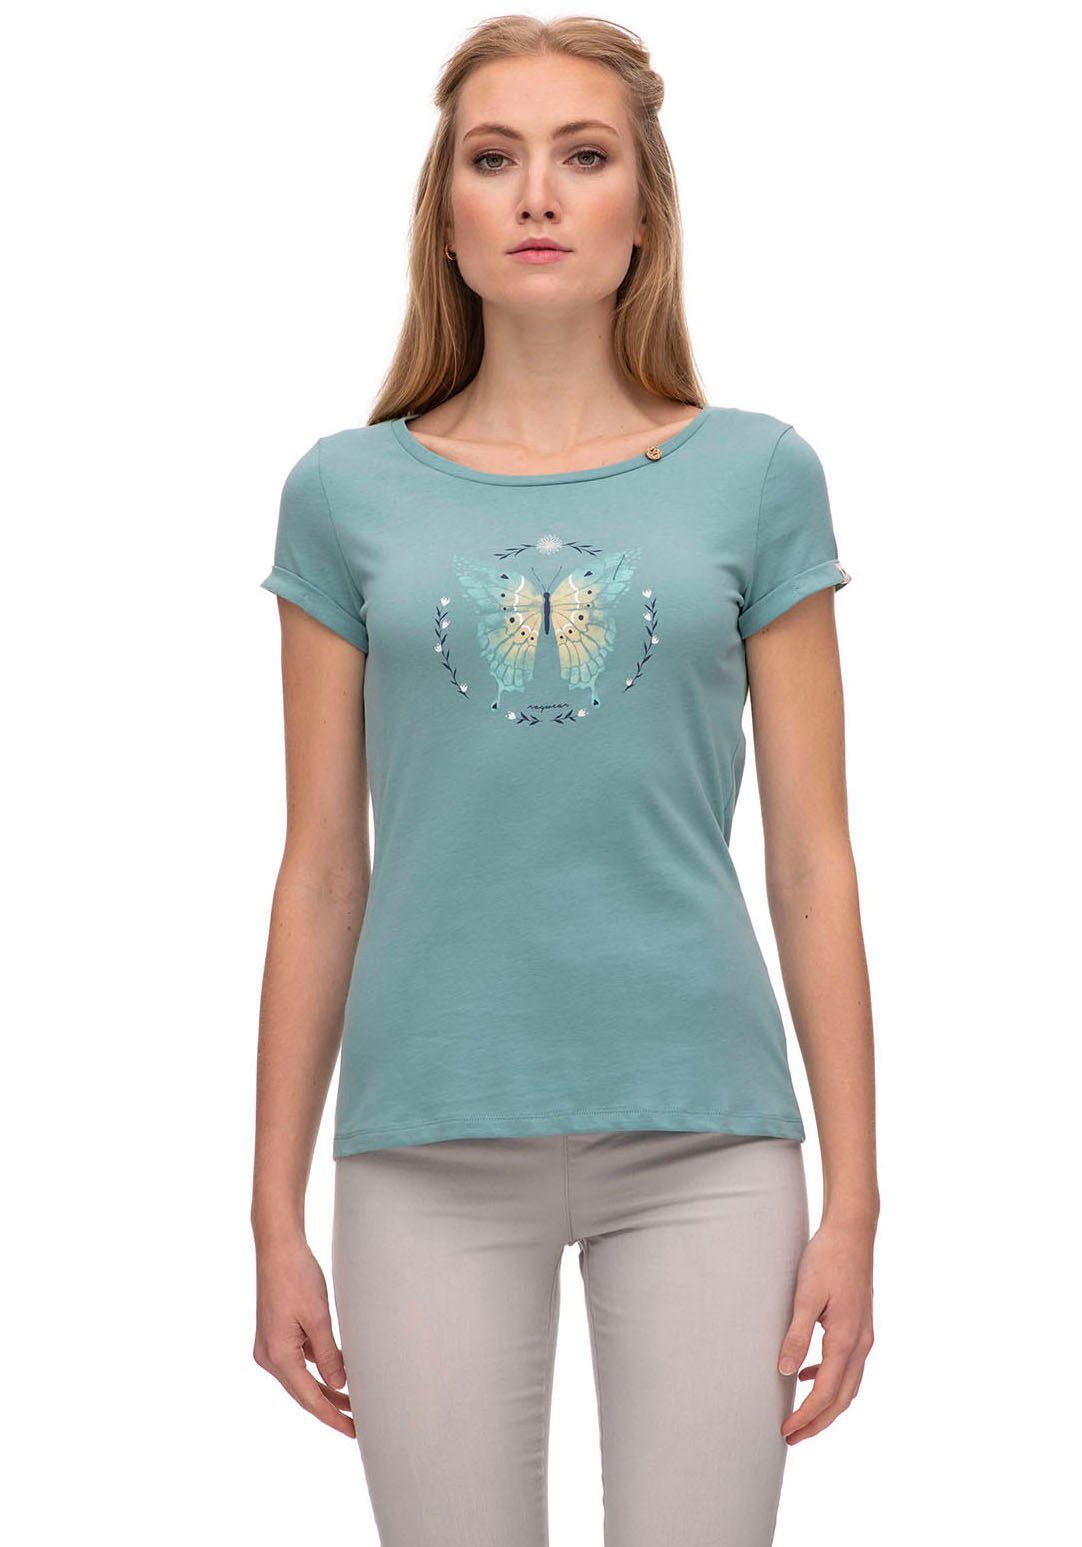 Brust auf Ragwear der FLORAH ORGAN aqua Shirt Schmetterlings-Print T-Shirt Rundhalsshirt mit BUTTERFLY